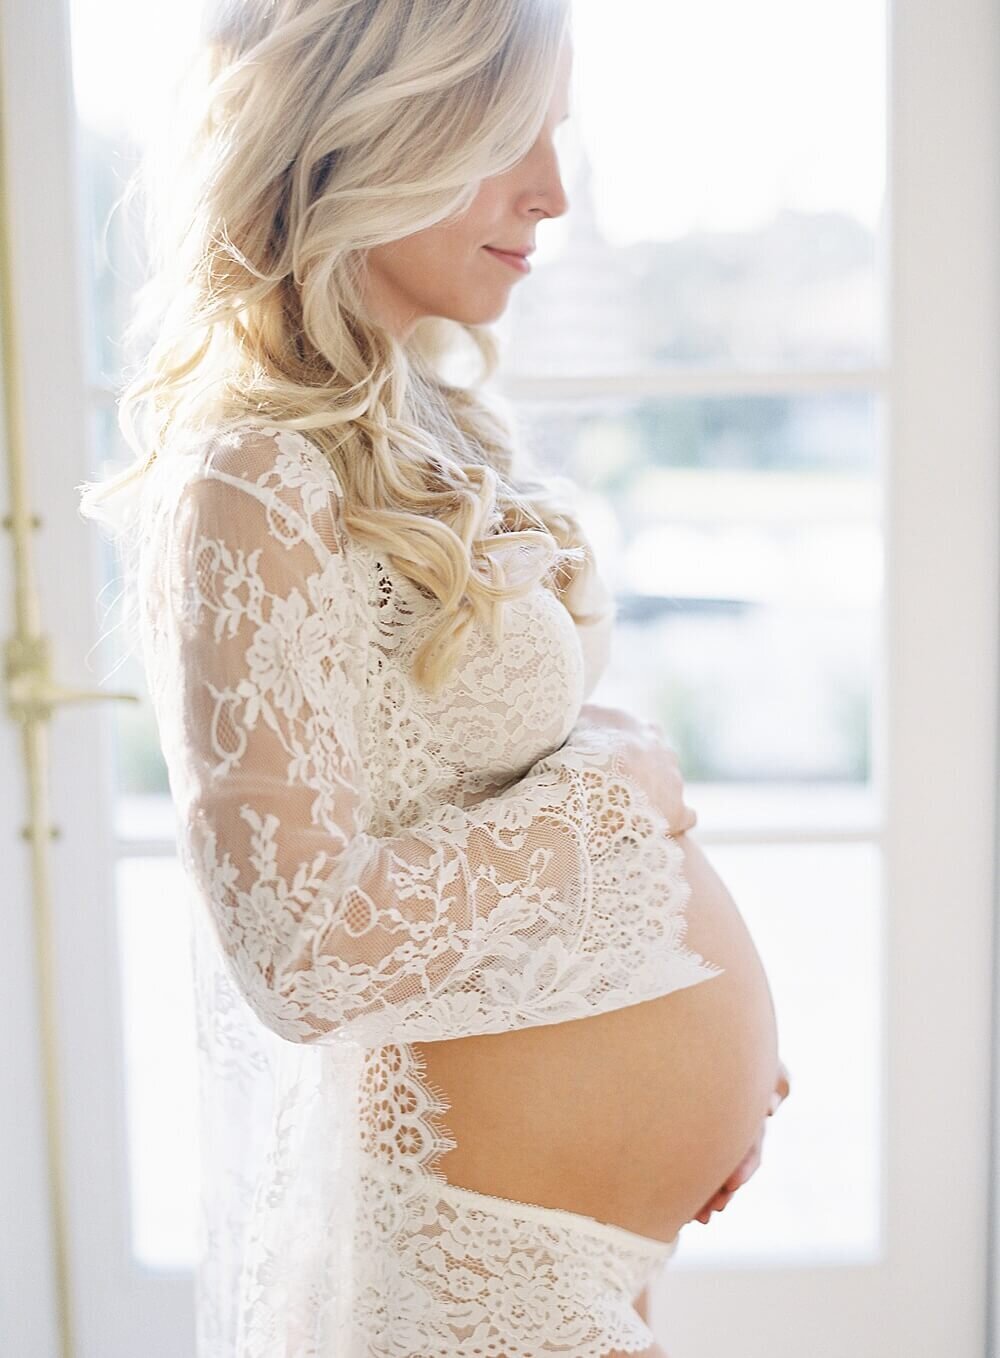 seattle-maternity-photographer-Jacqueline-Benet_0009